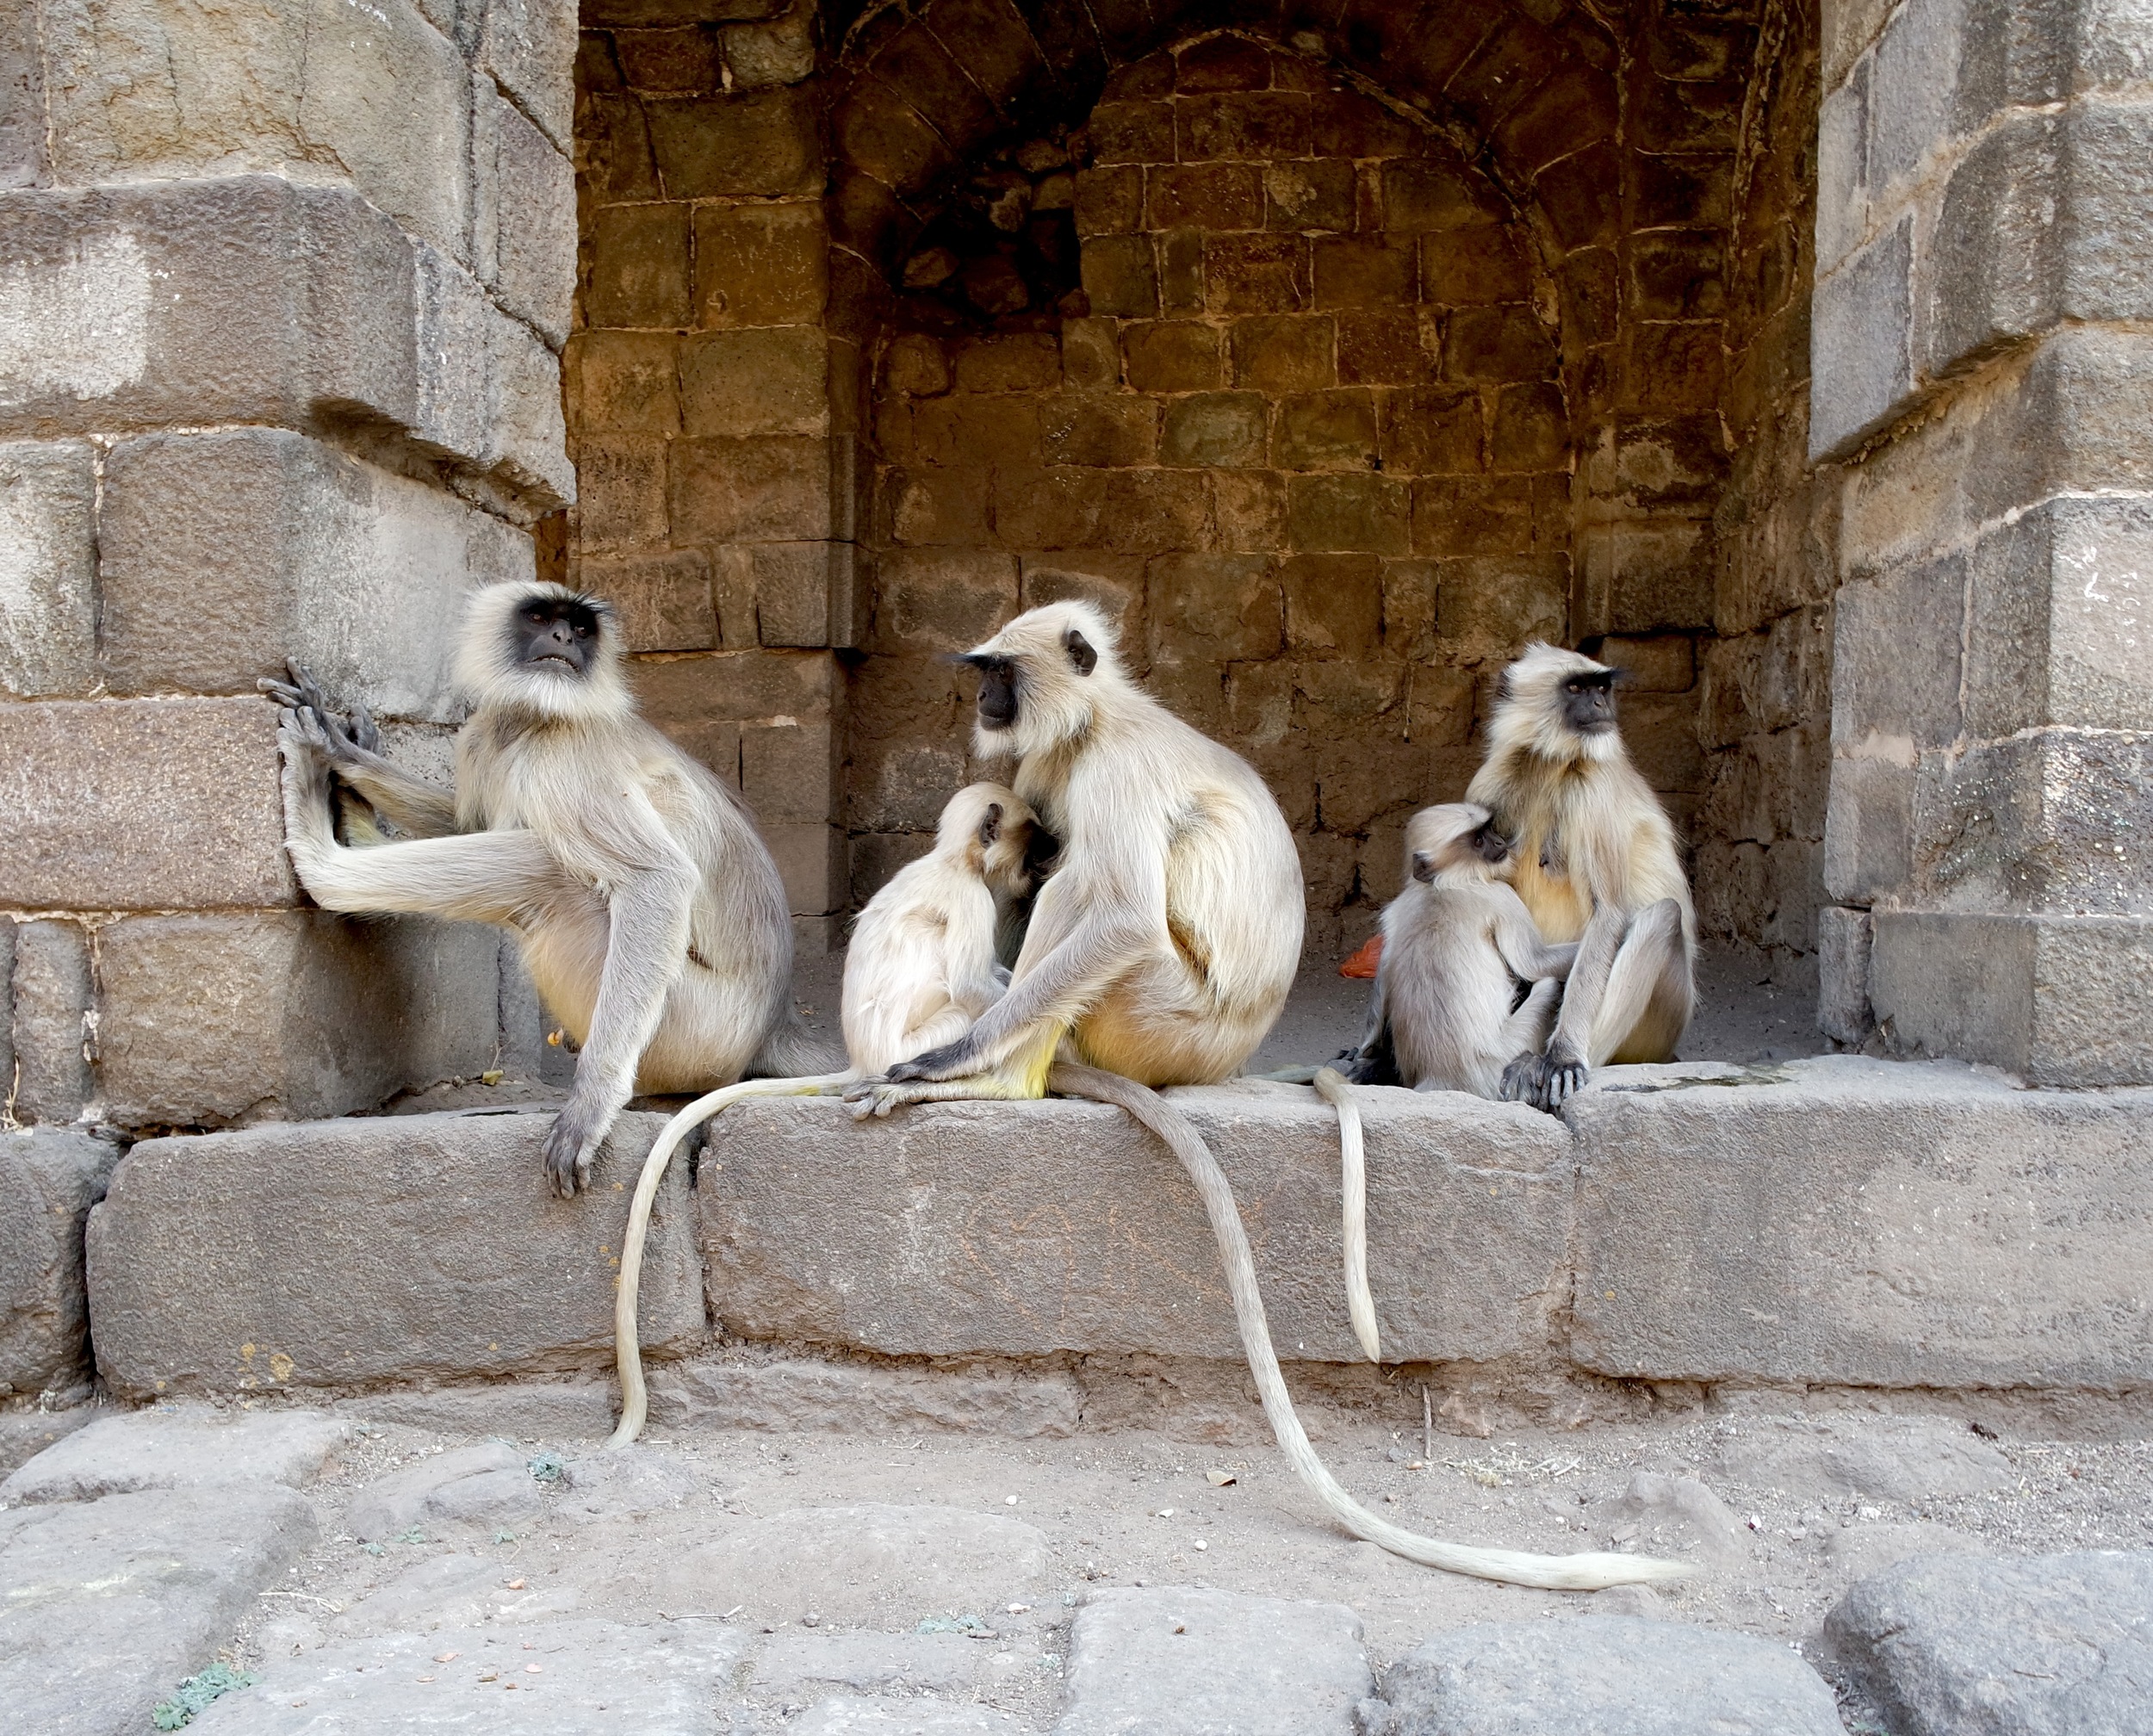  Langur monkeys are found throughout the complex 